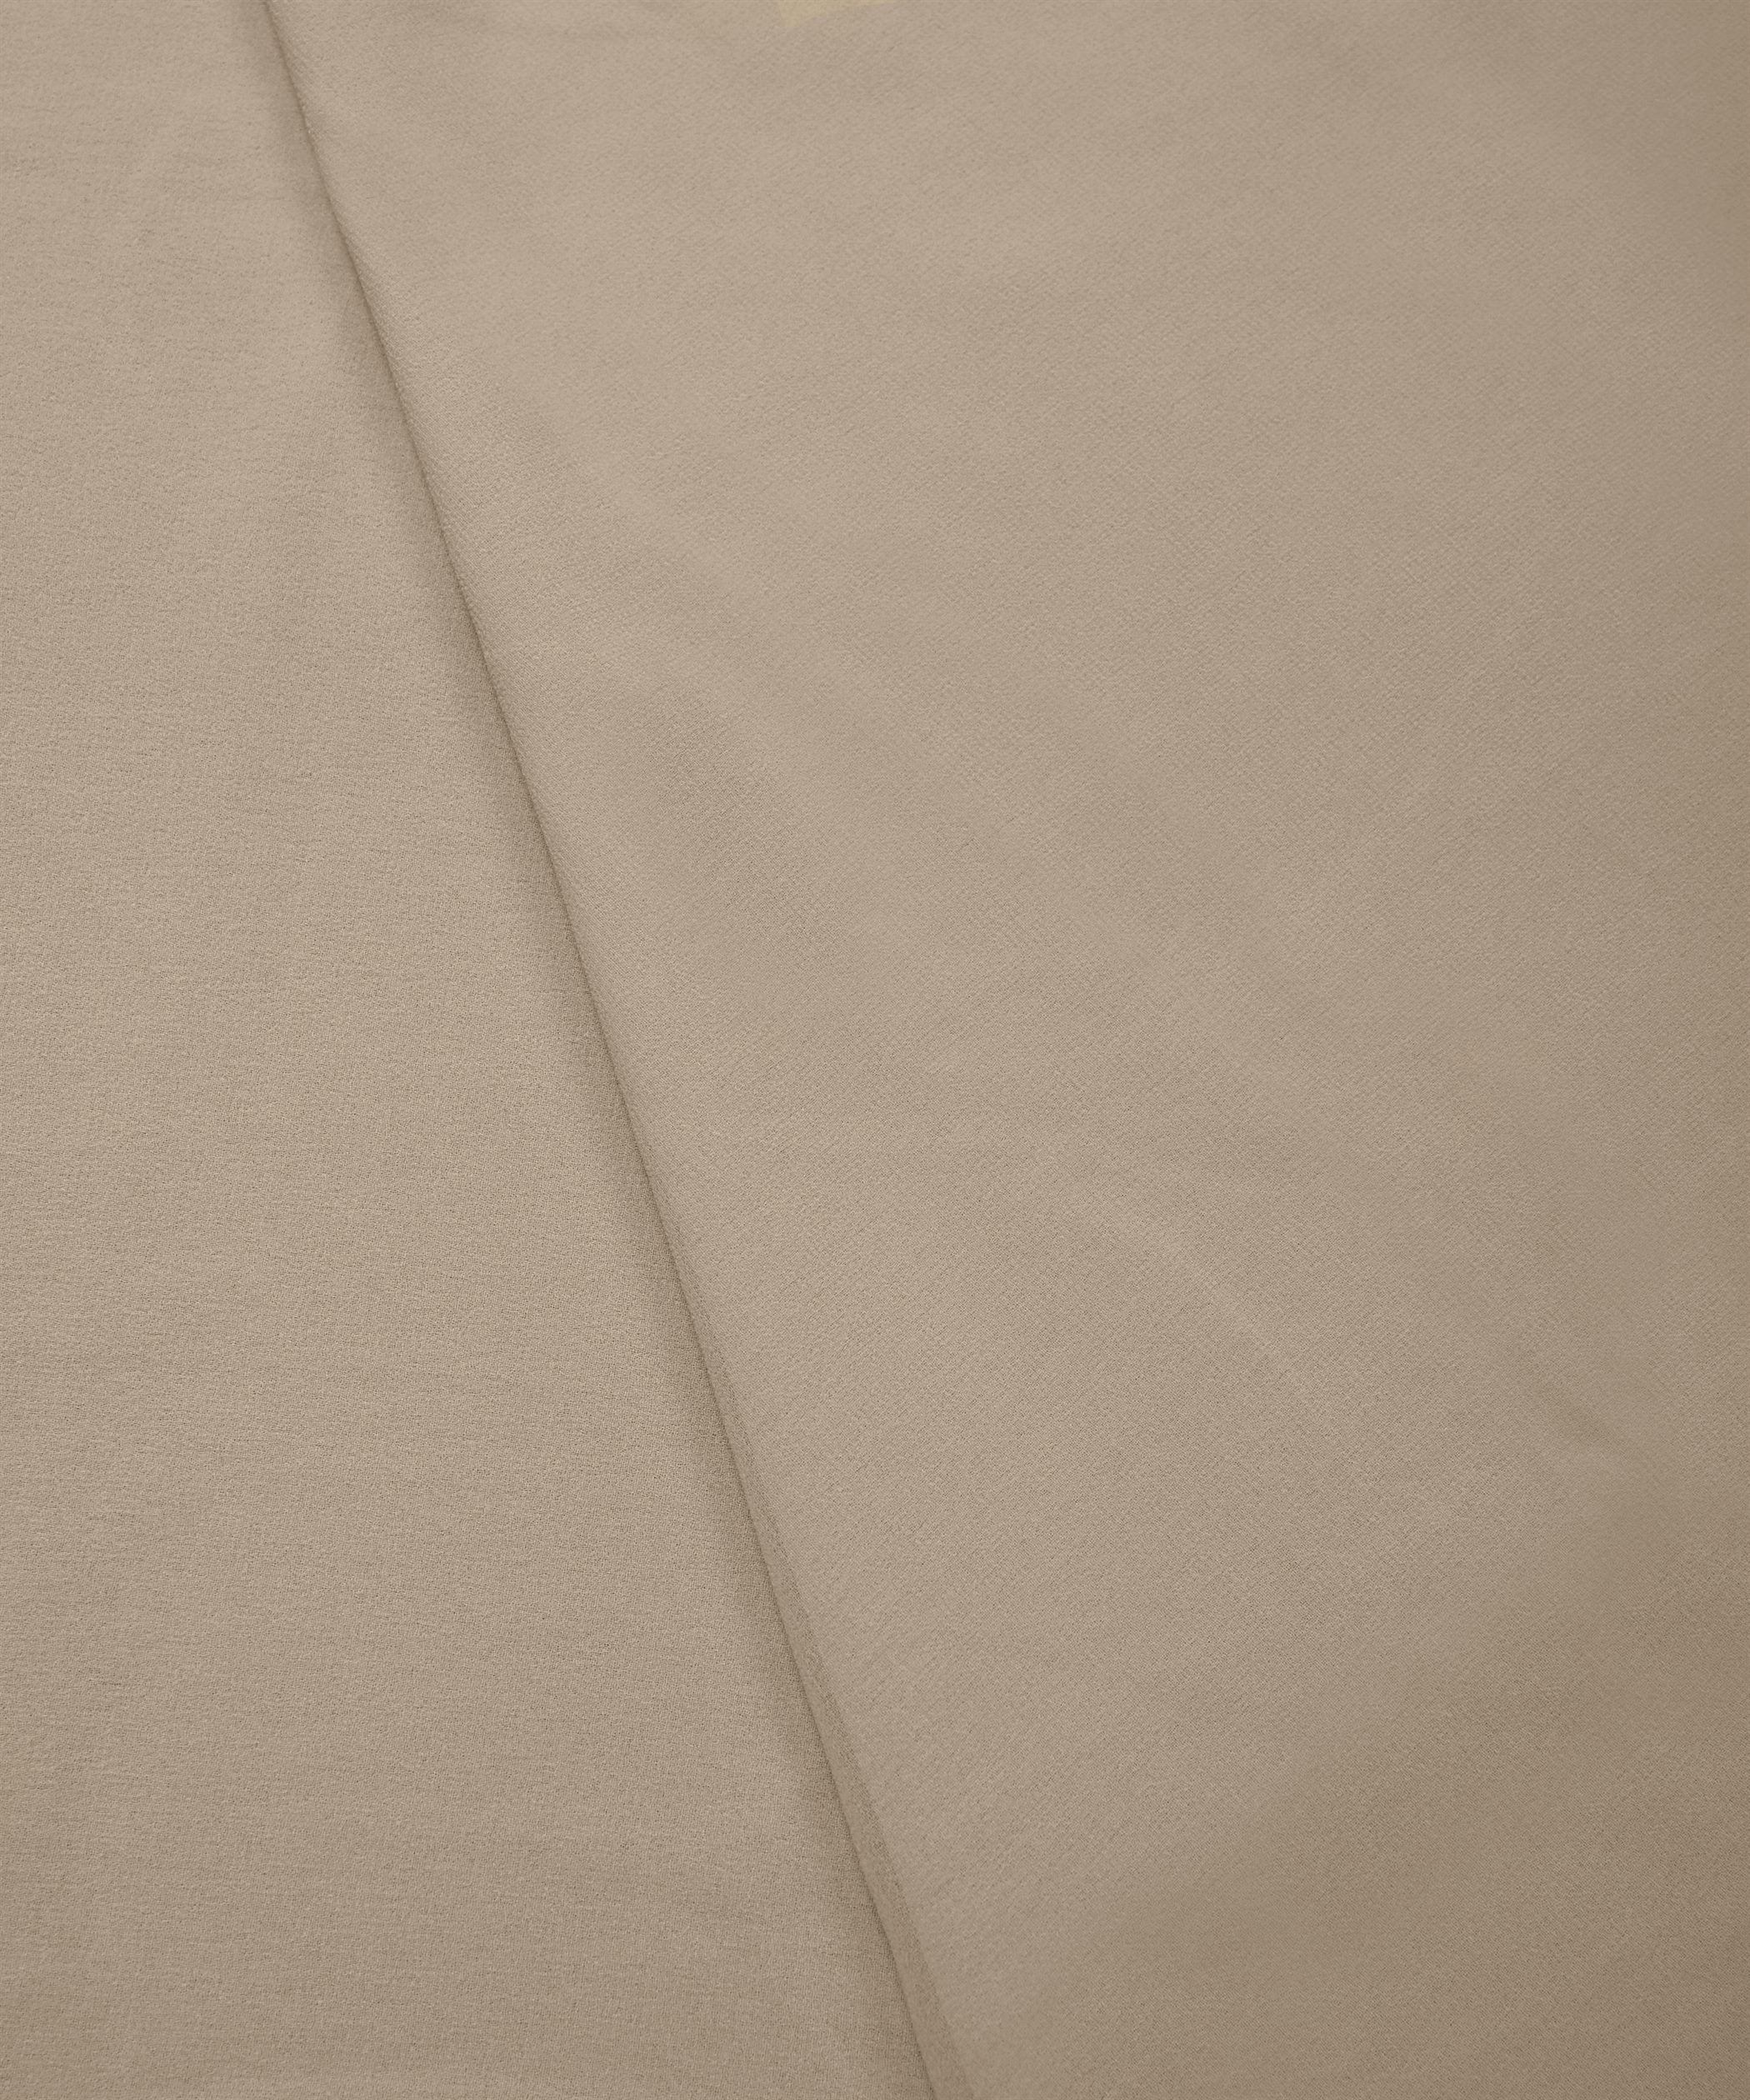 Bone White Plain Dyed Georgette (60 Grams) Fabric